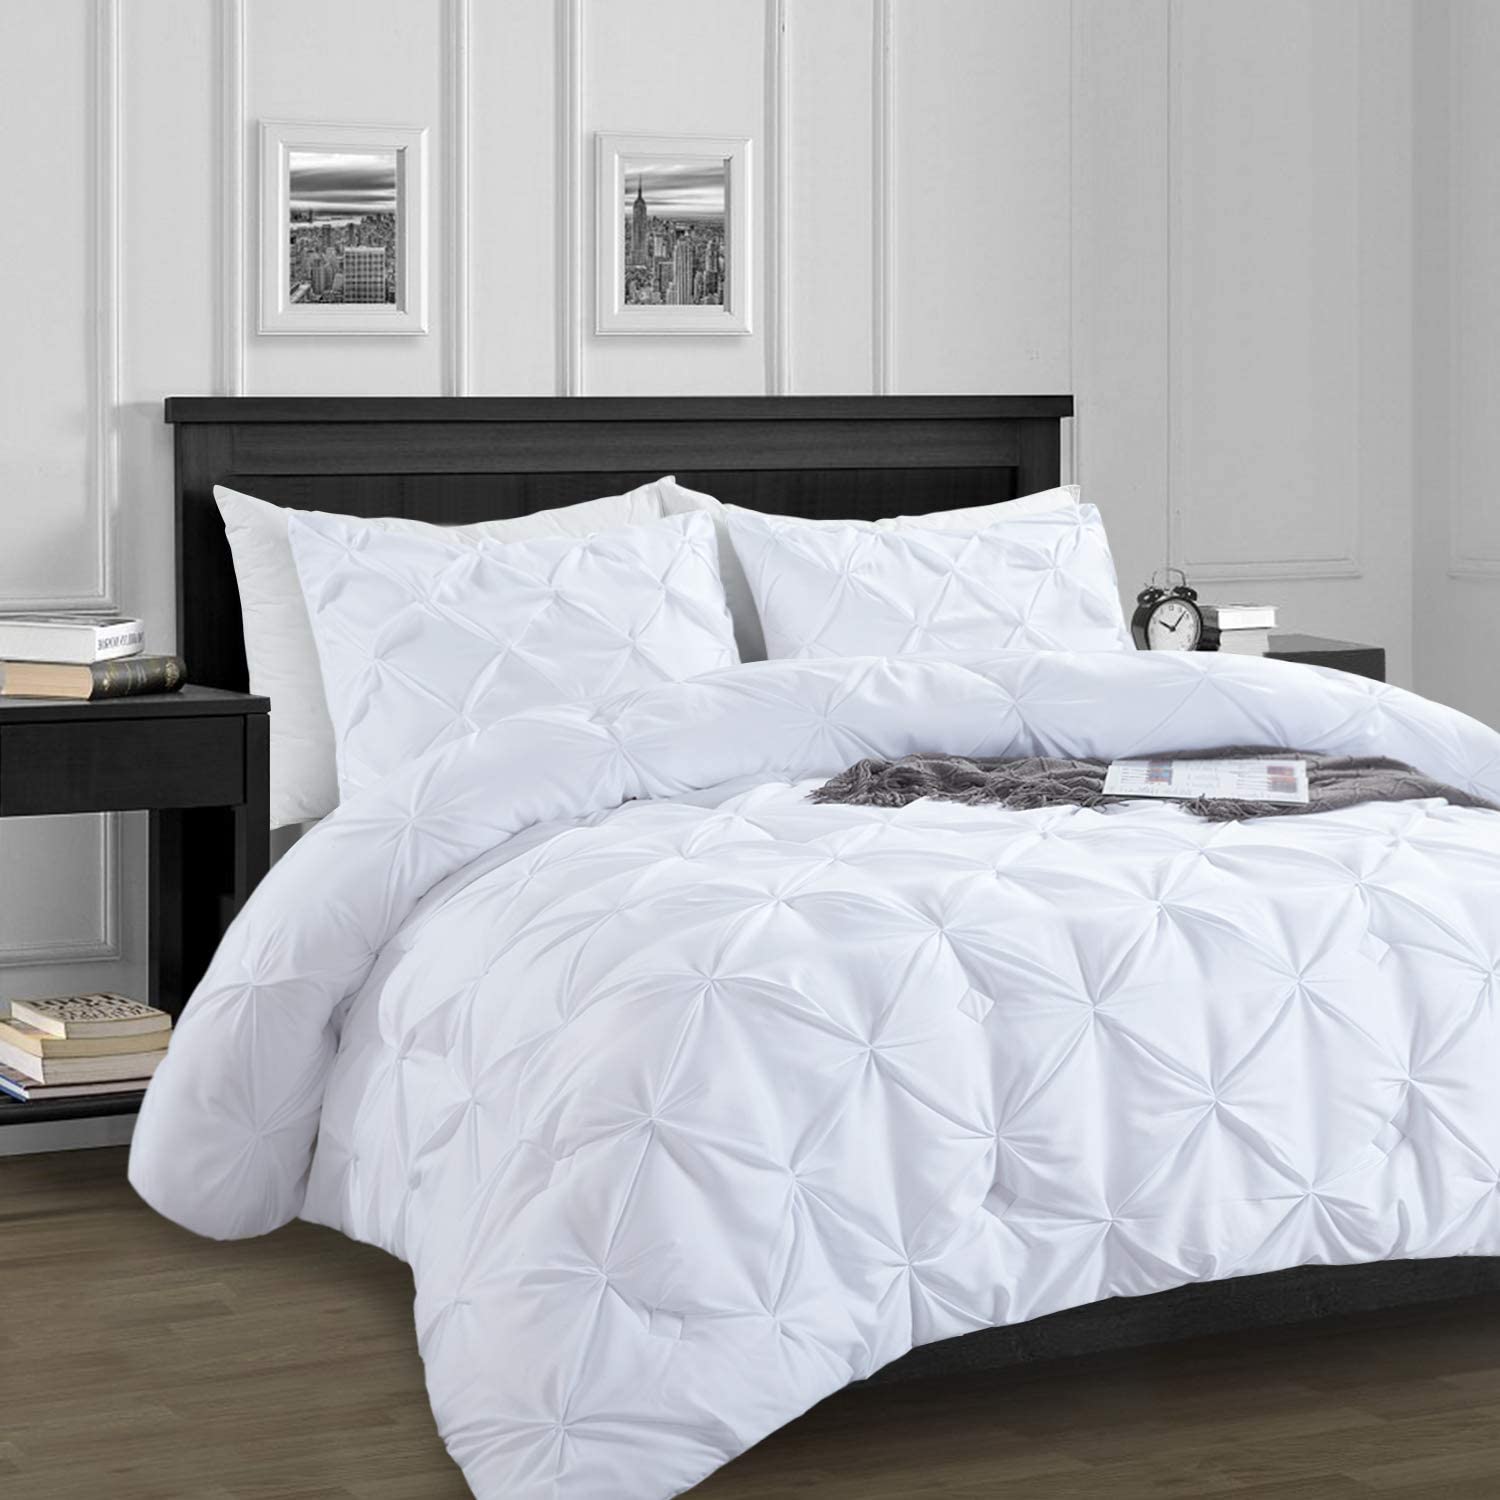 HOMBYS White Comforter Set King Size Lightweight Soft Pinch Pleat Duvet